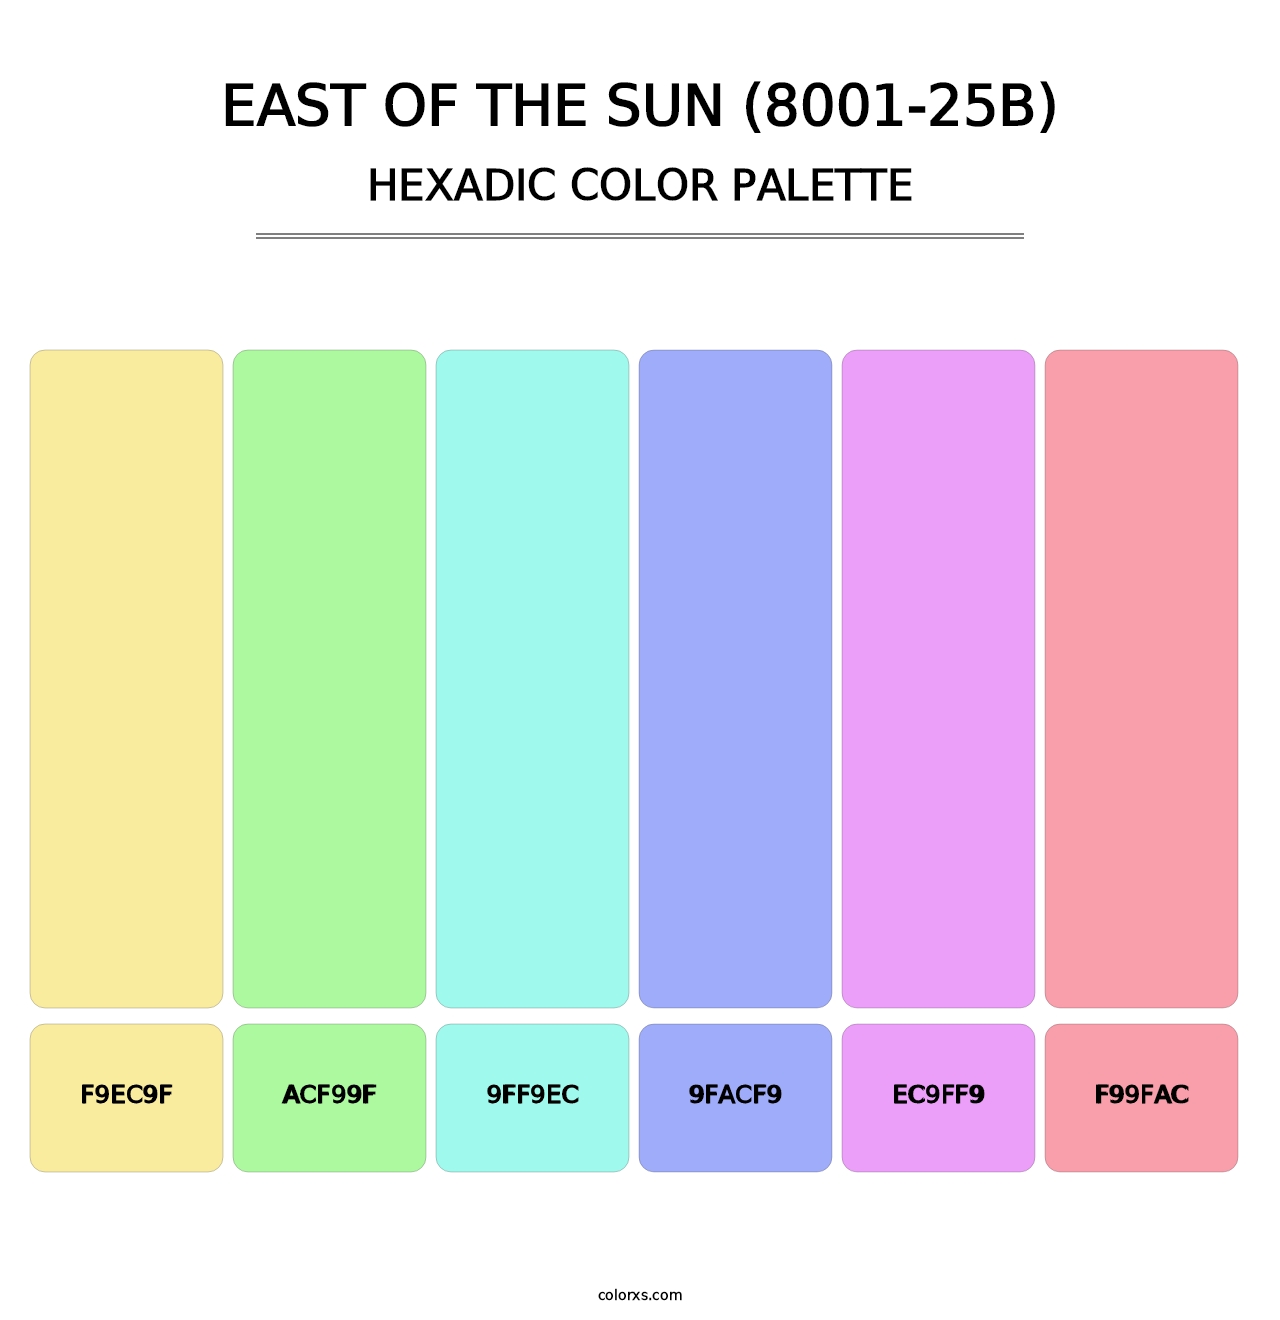 East of the Sun (8001-25B) - Hexadic Color Palette